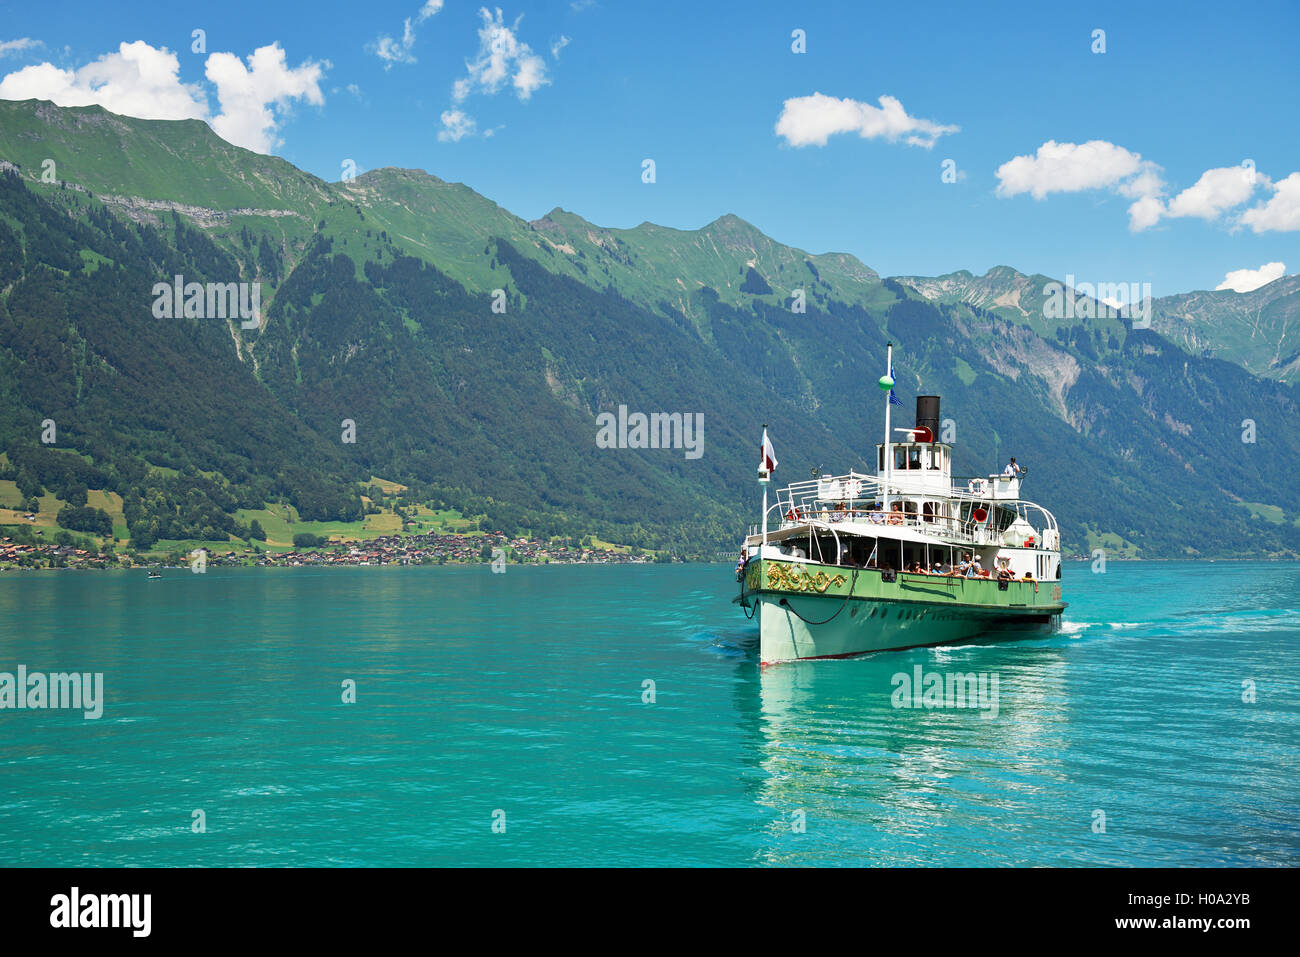 Steamboat Lötschberg en el lago de Brienz, Interlaken Ost, Cantón de Berna, Suiza Foto de stock